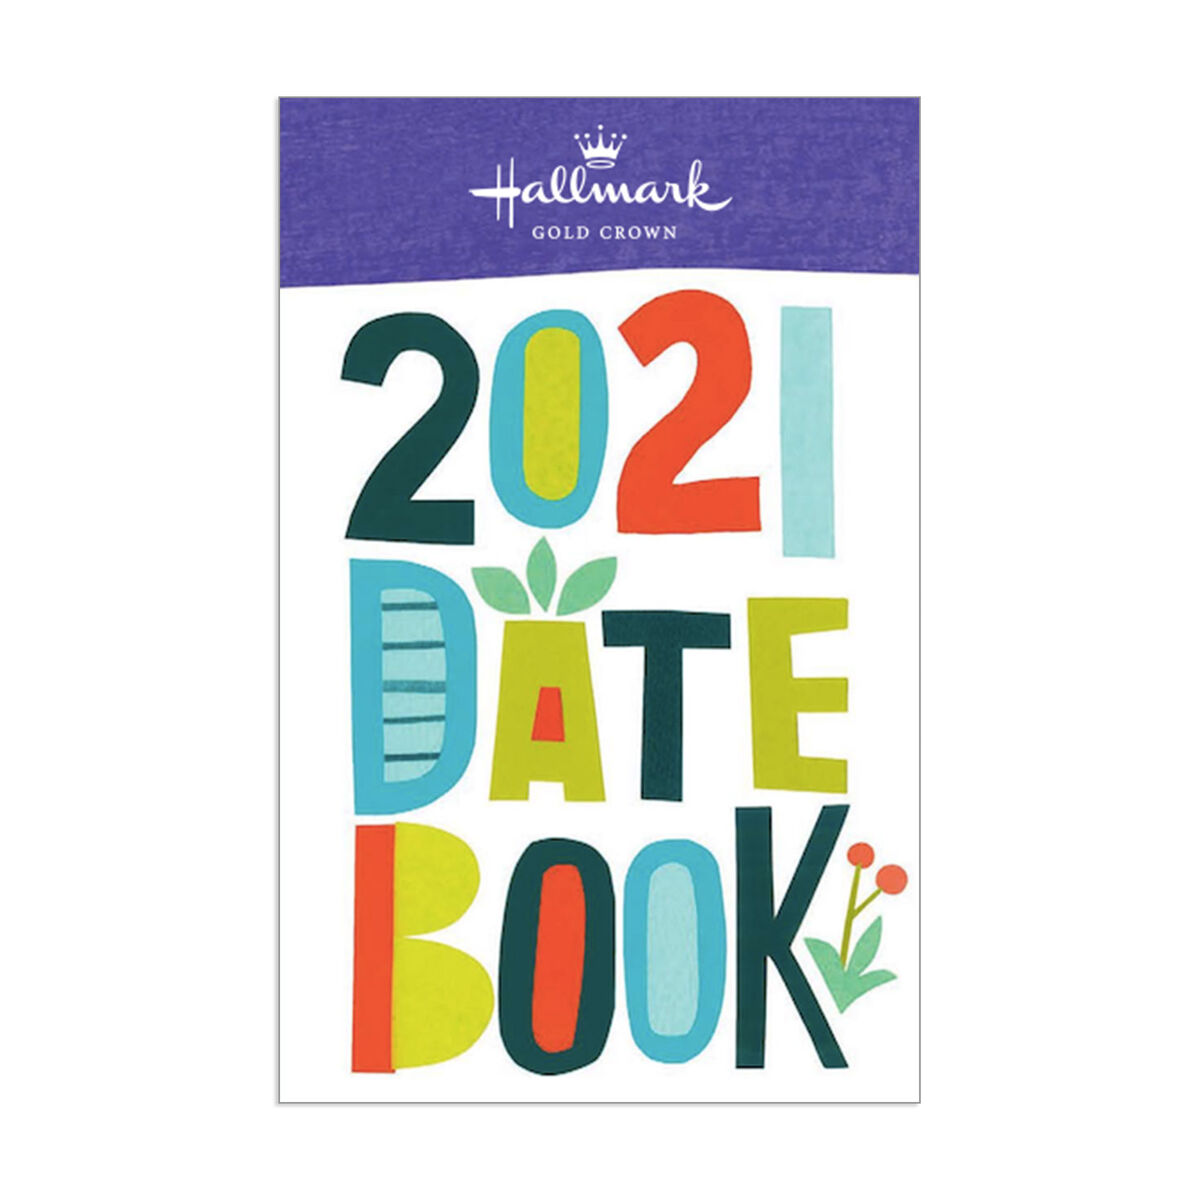 2021 Hallmark Datebook Products Hallmark